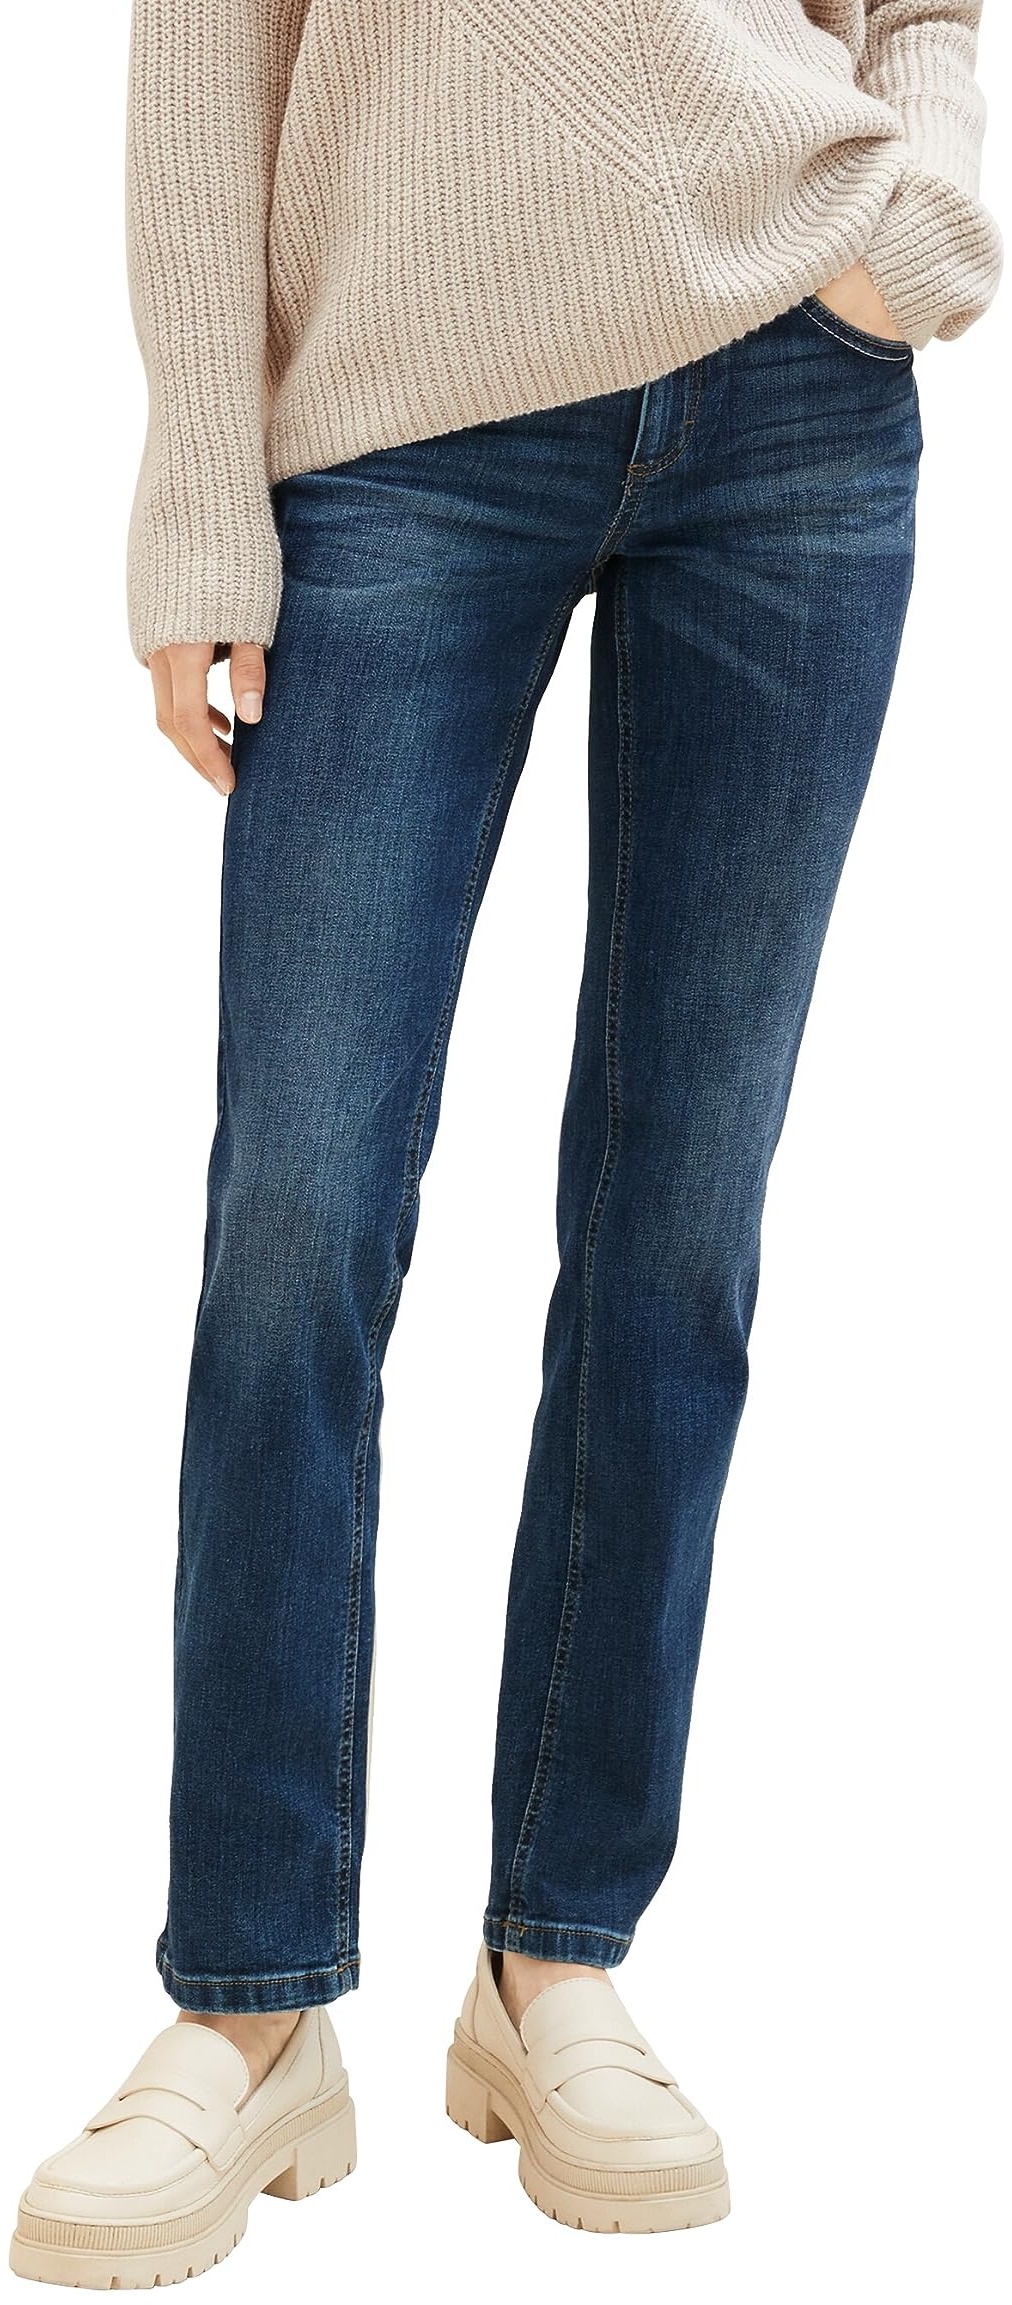 TOM TAILOR Damen 1008119 Alexa Straight Jeans, 10281 - Mid Stone Wash Denim, 27W / 34L EU